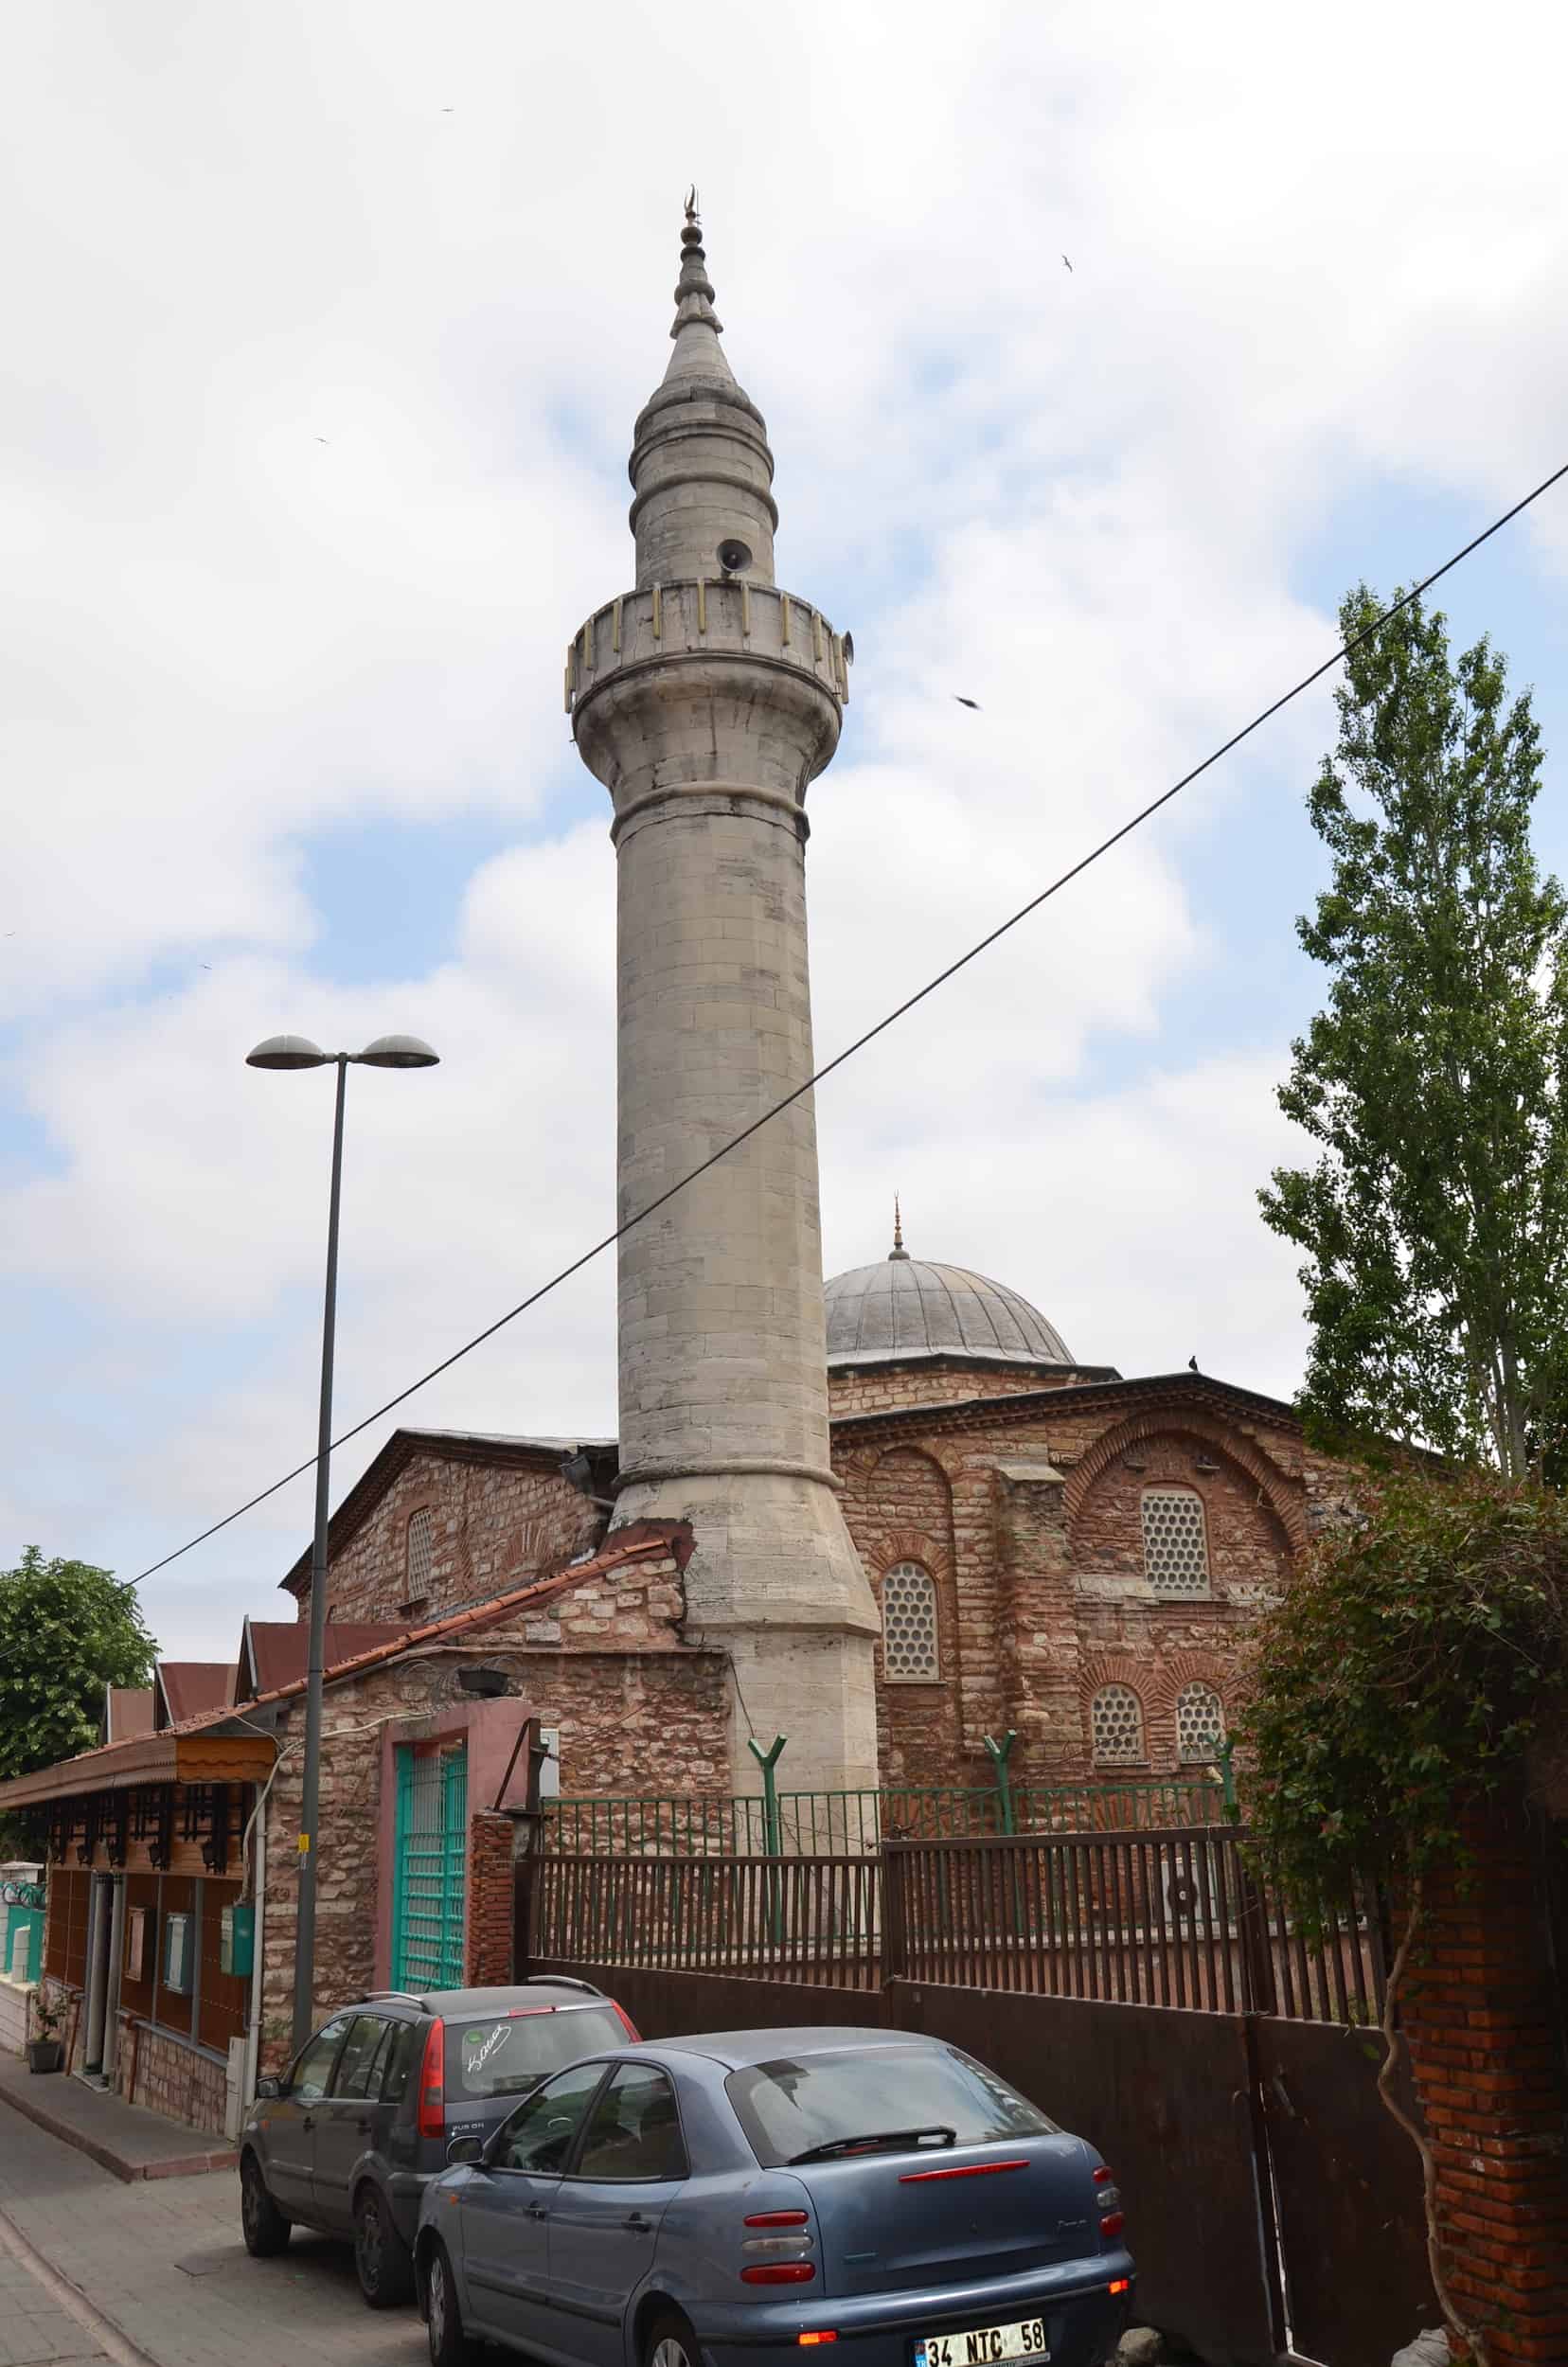 Atik Mustafa Pasha Mosque in Ayvansaray, Istanbul, Turkey